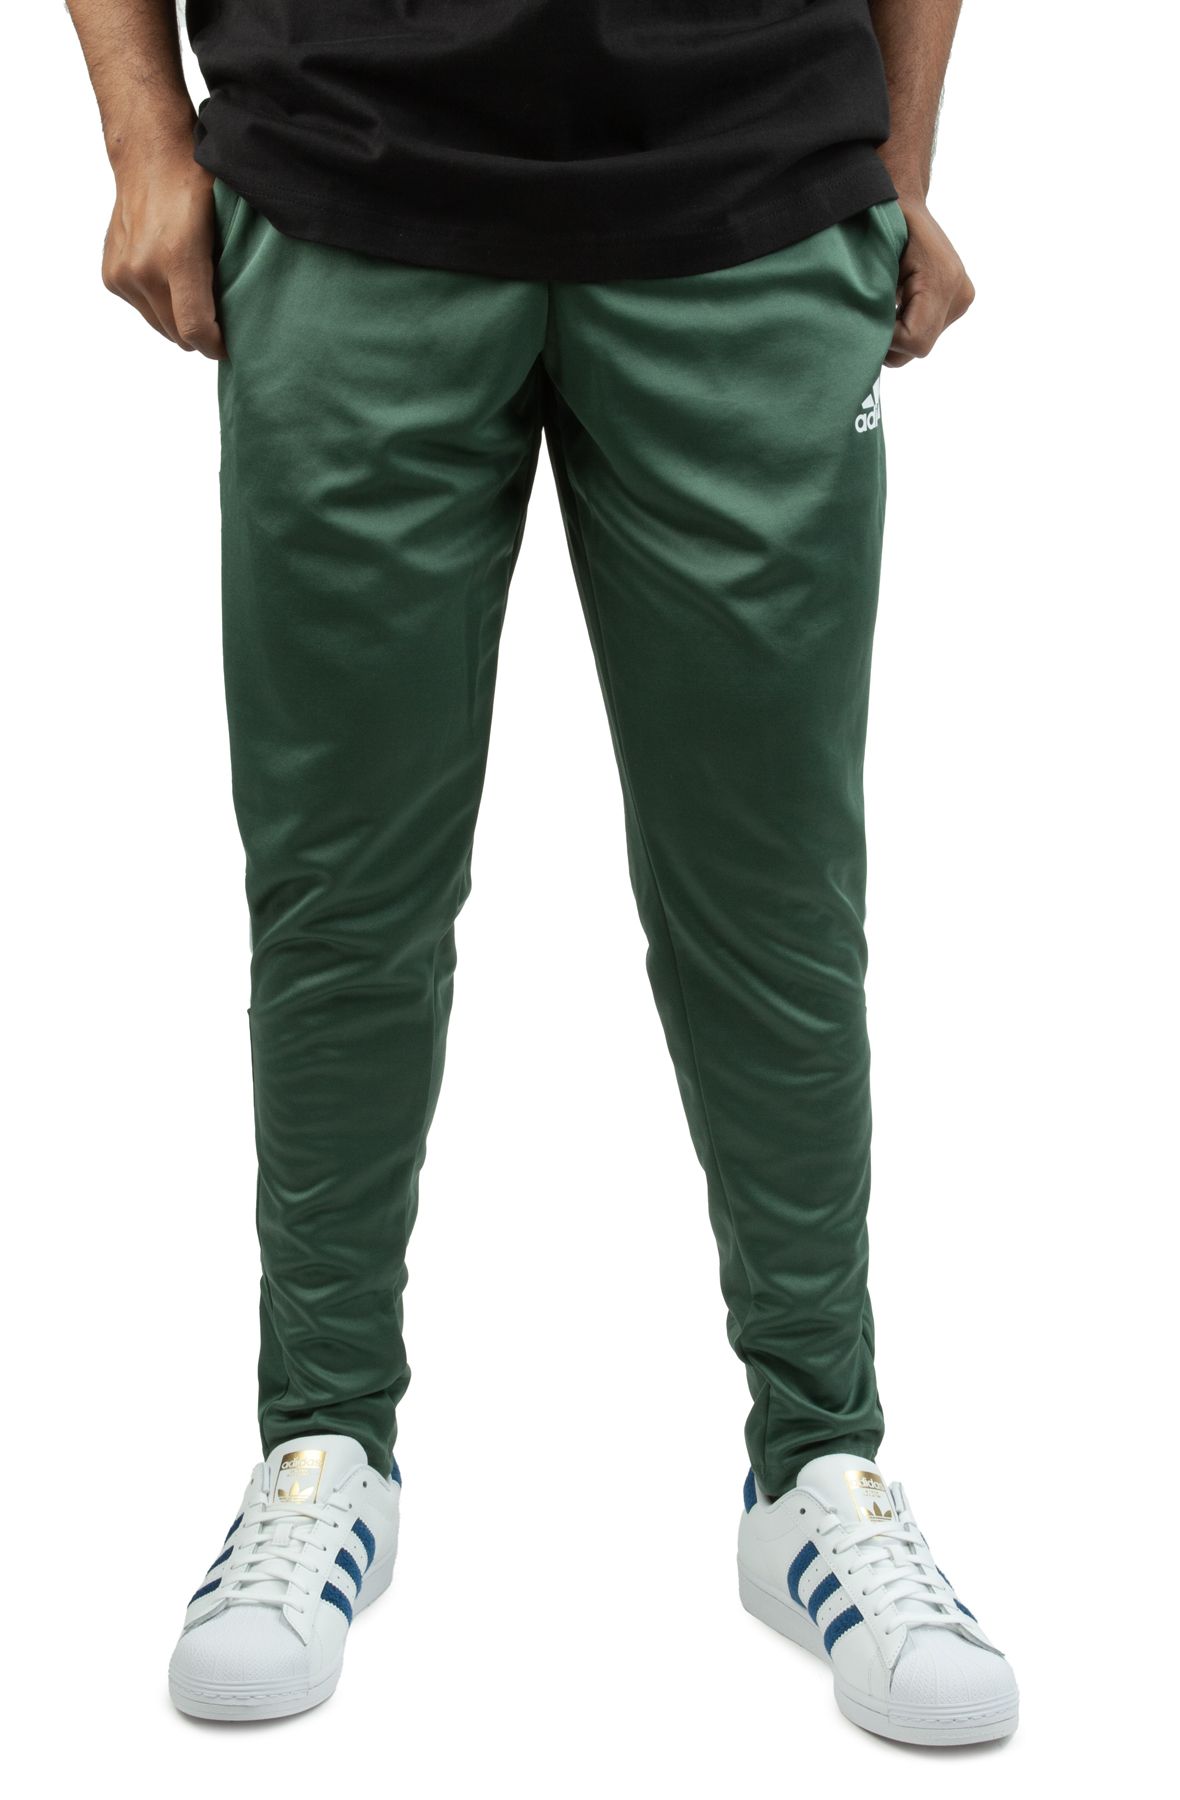 adidas Men's Climacool Soccer Pants in Green for Men